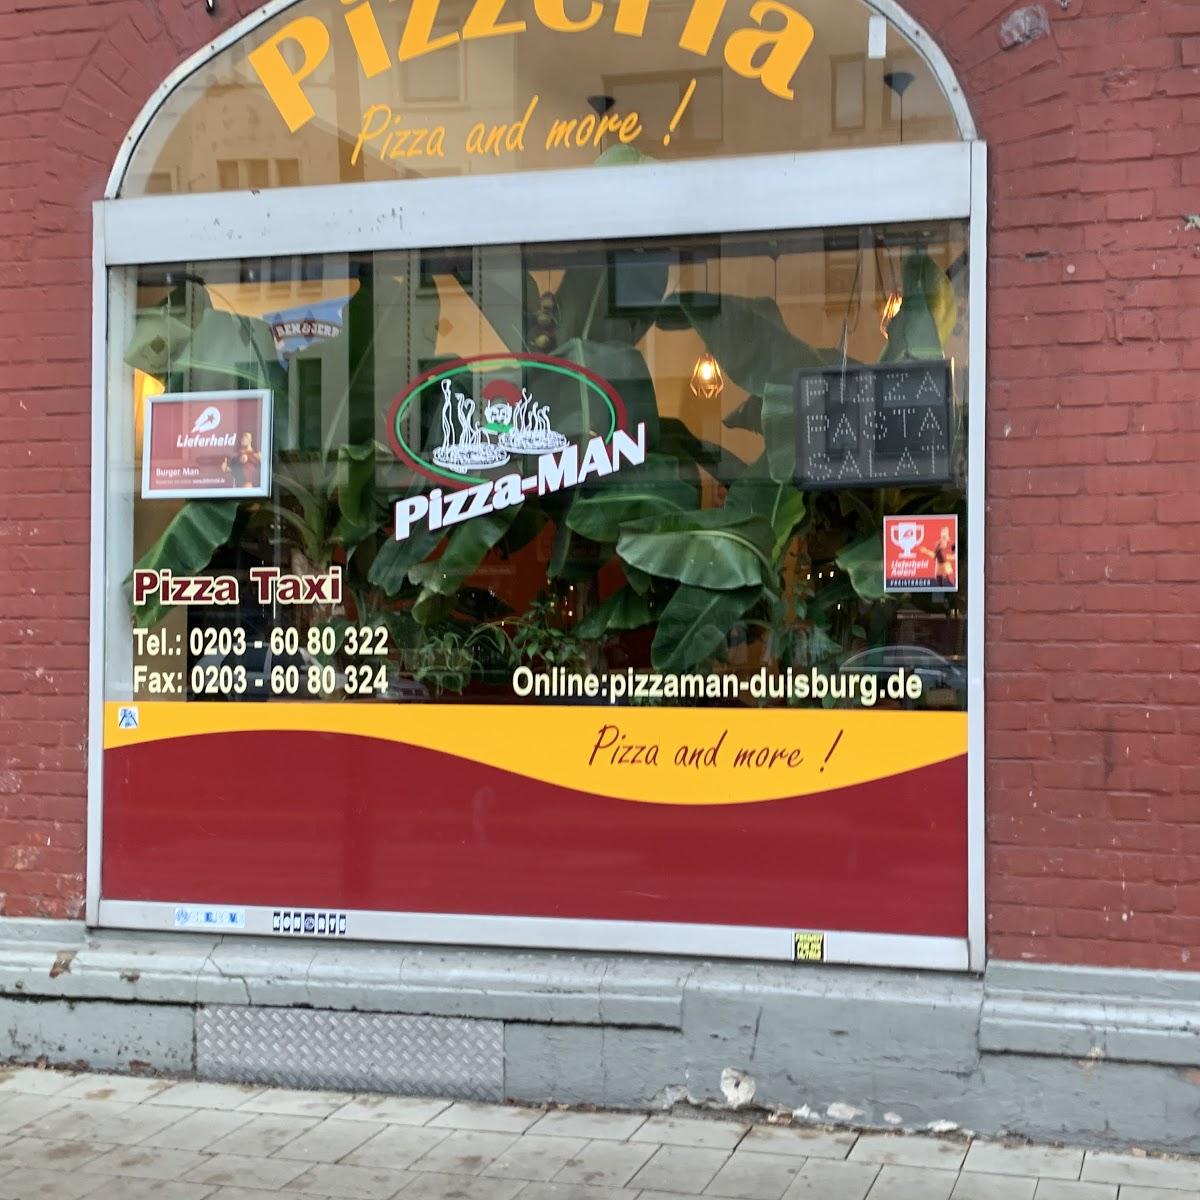 Restaurant "Pizzeria Pizza Man" in Duisburg